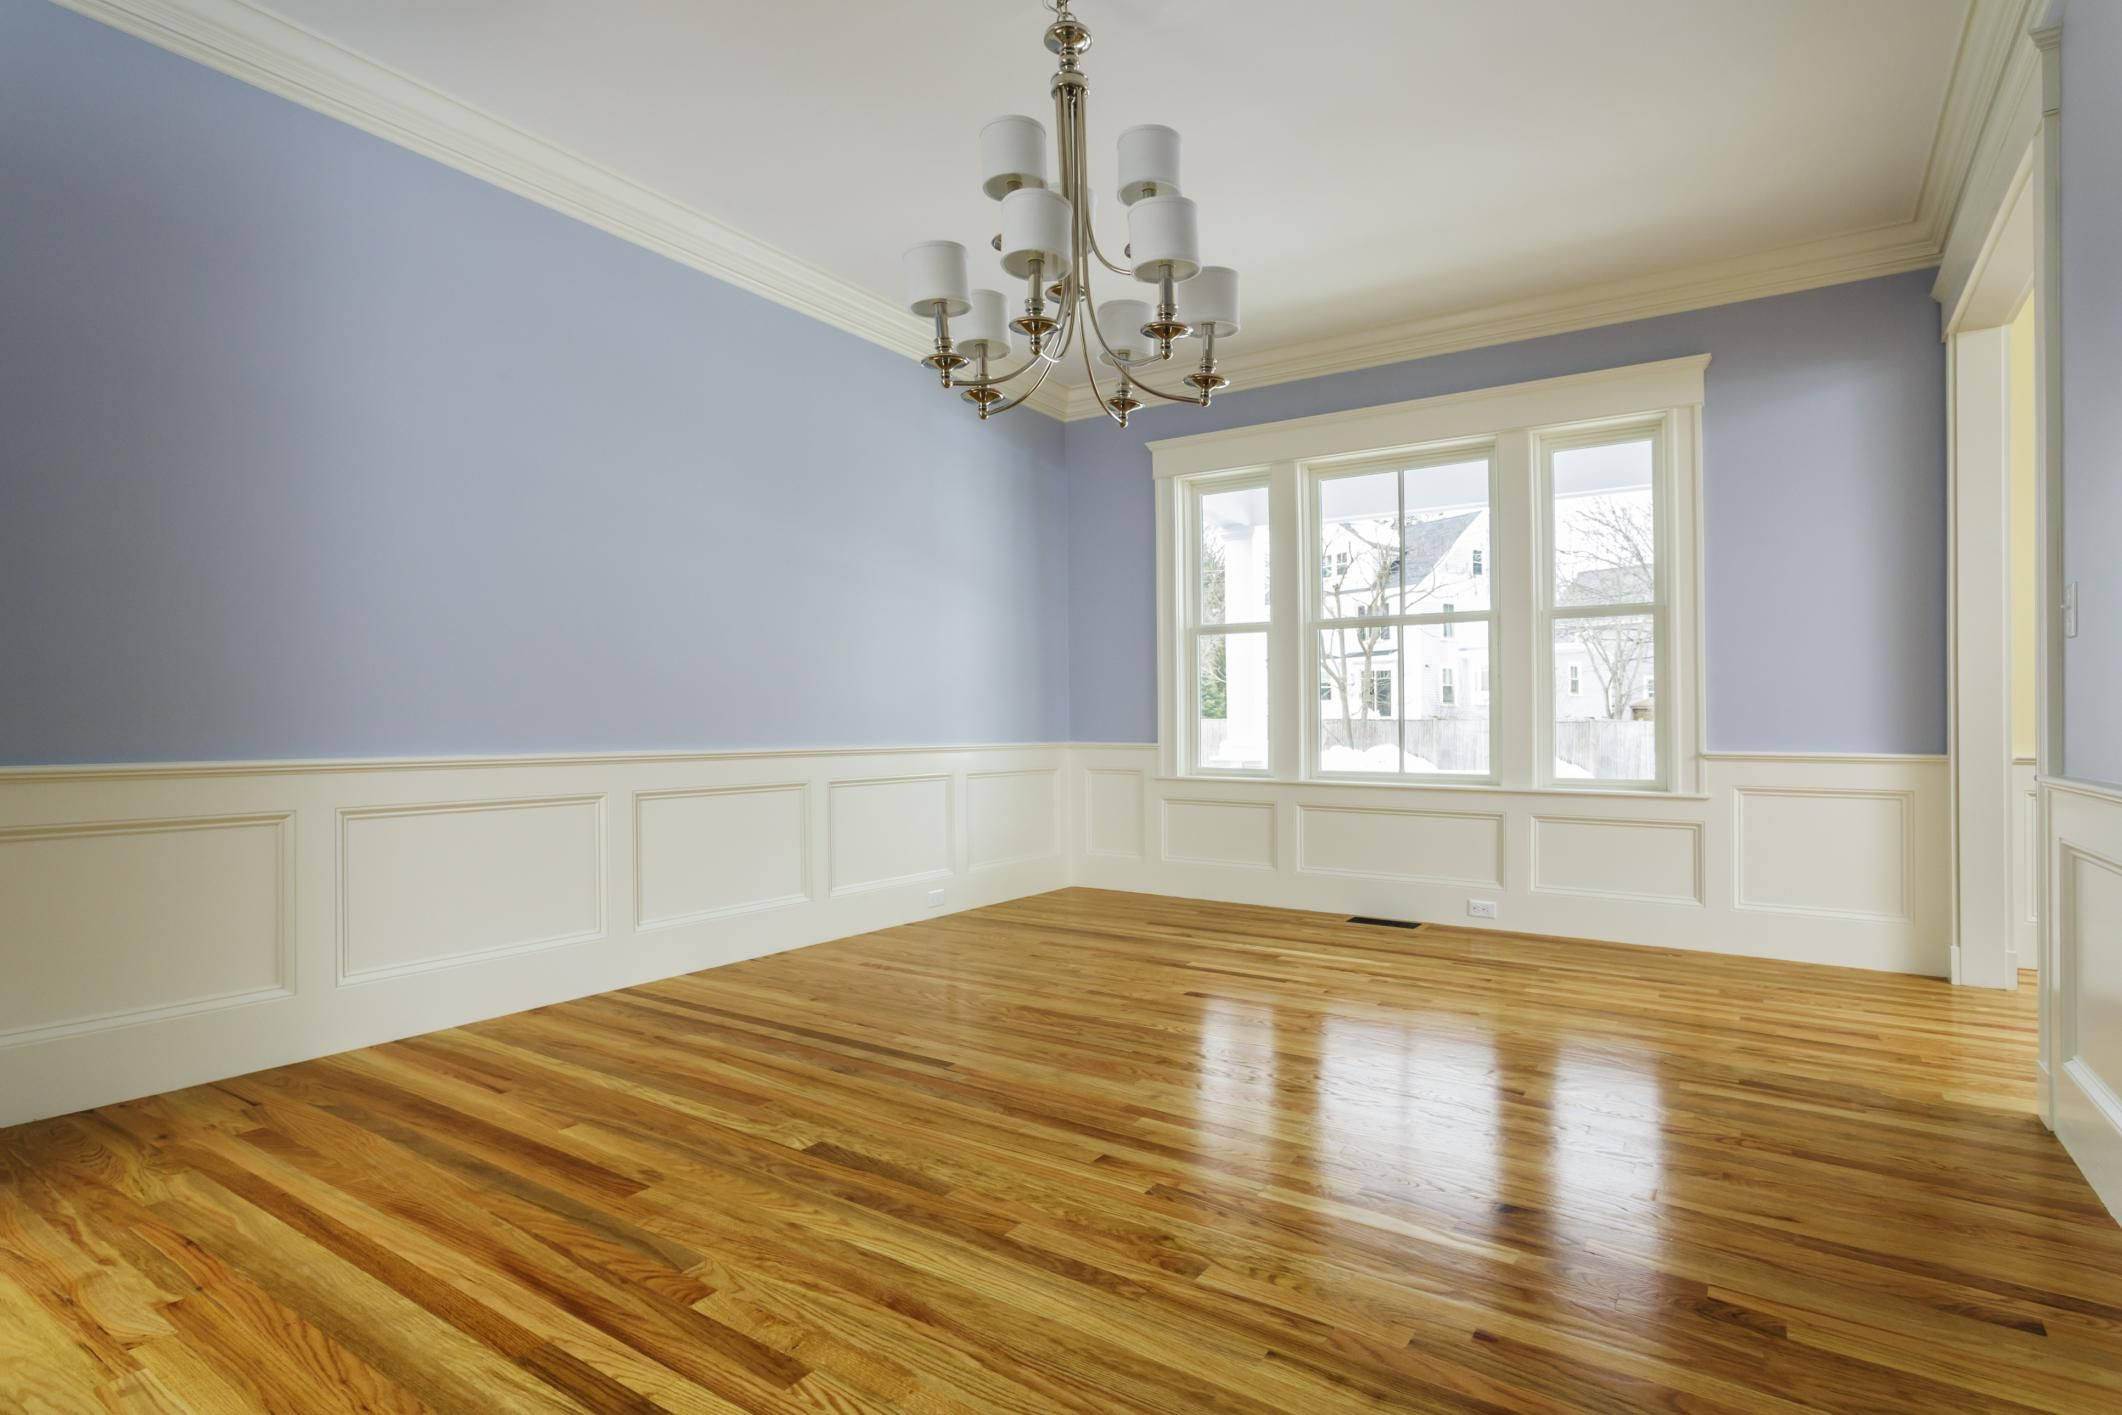 24 Stylish Hardwood Flooring Options Pros Cons 2024 free download hardwood flooring options pros cons of engineered laminate solid hardwood wood flooring with 168686572 56a49ed73df78cf772834d31